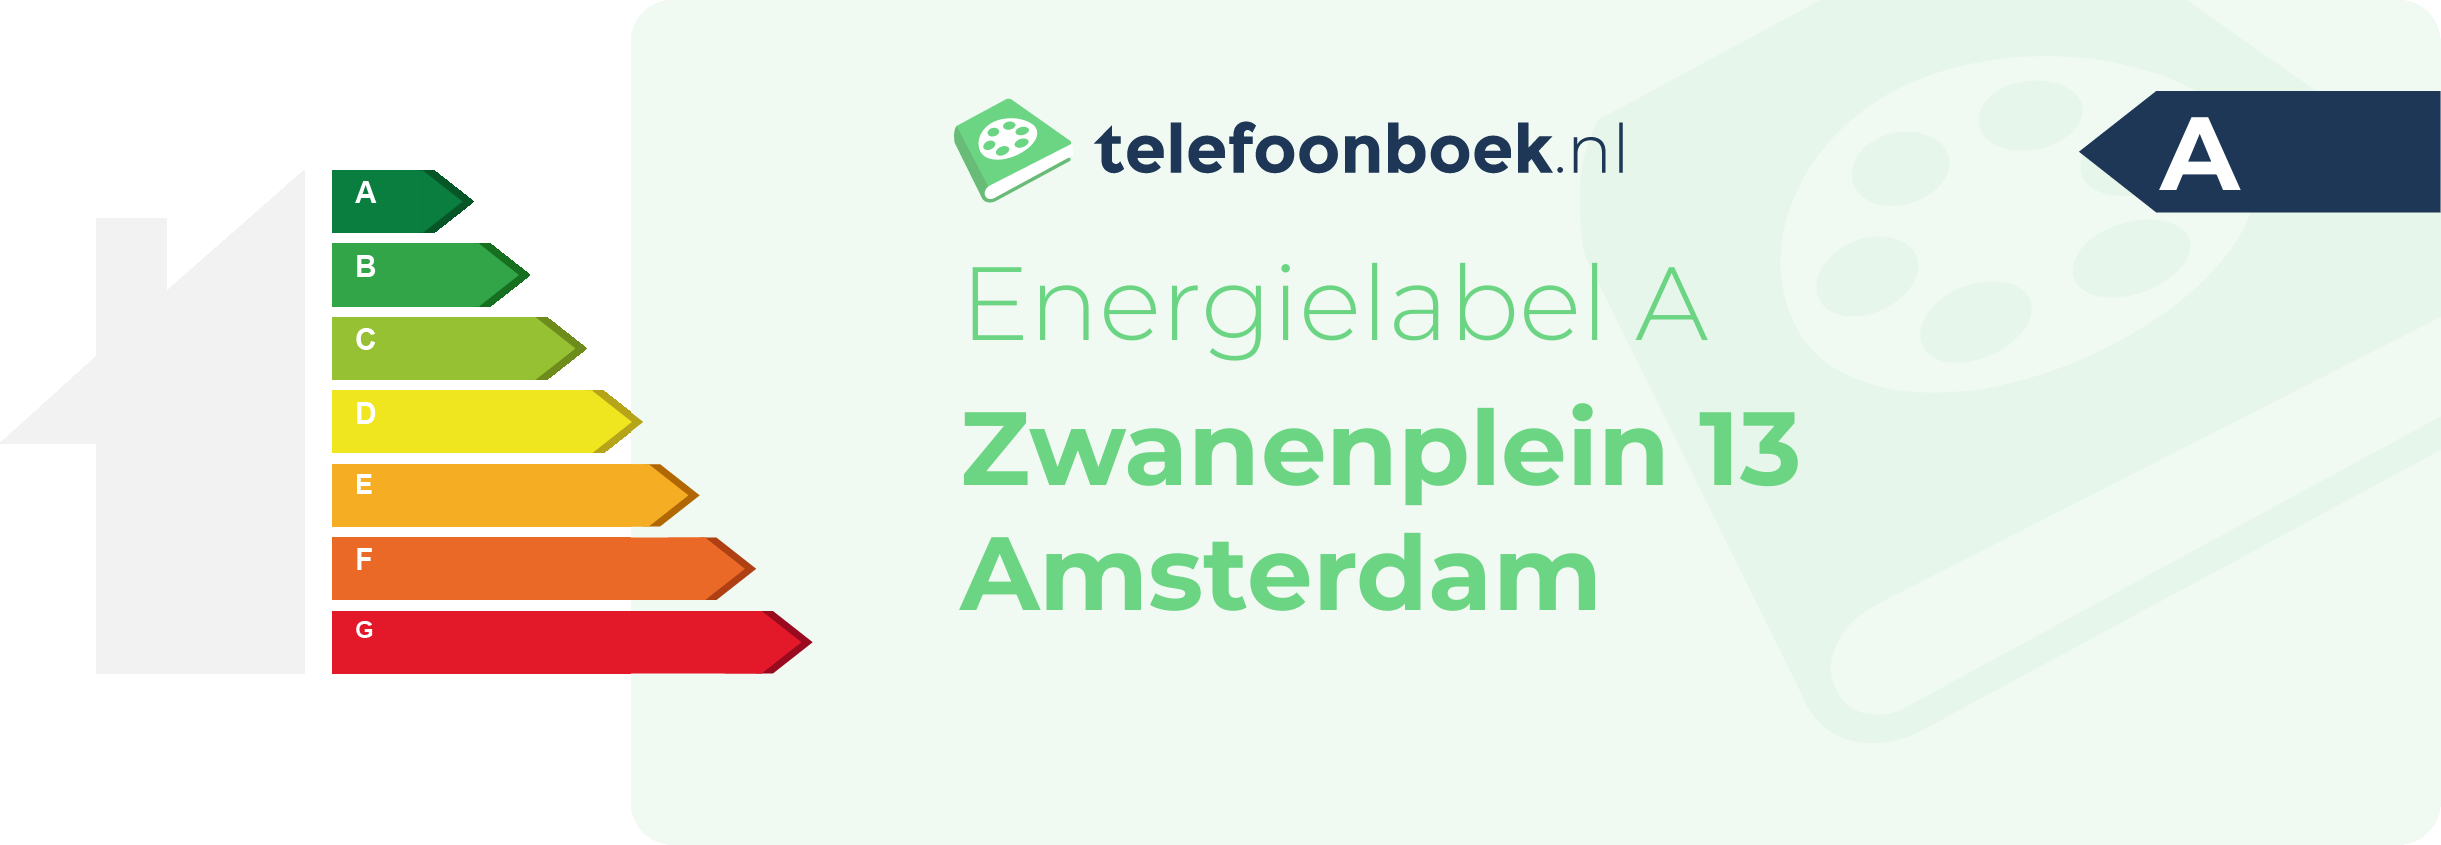 Energielabel Zwanenplein 13 Amsterdam